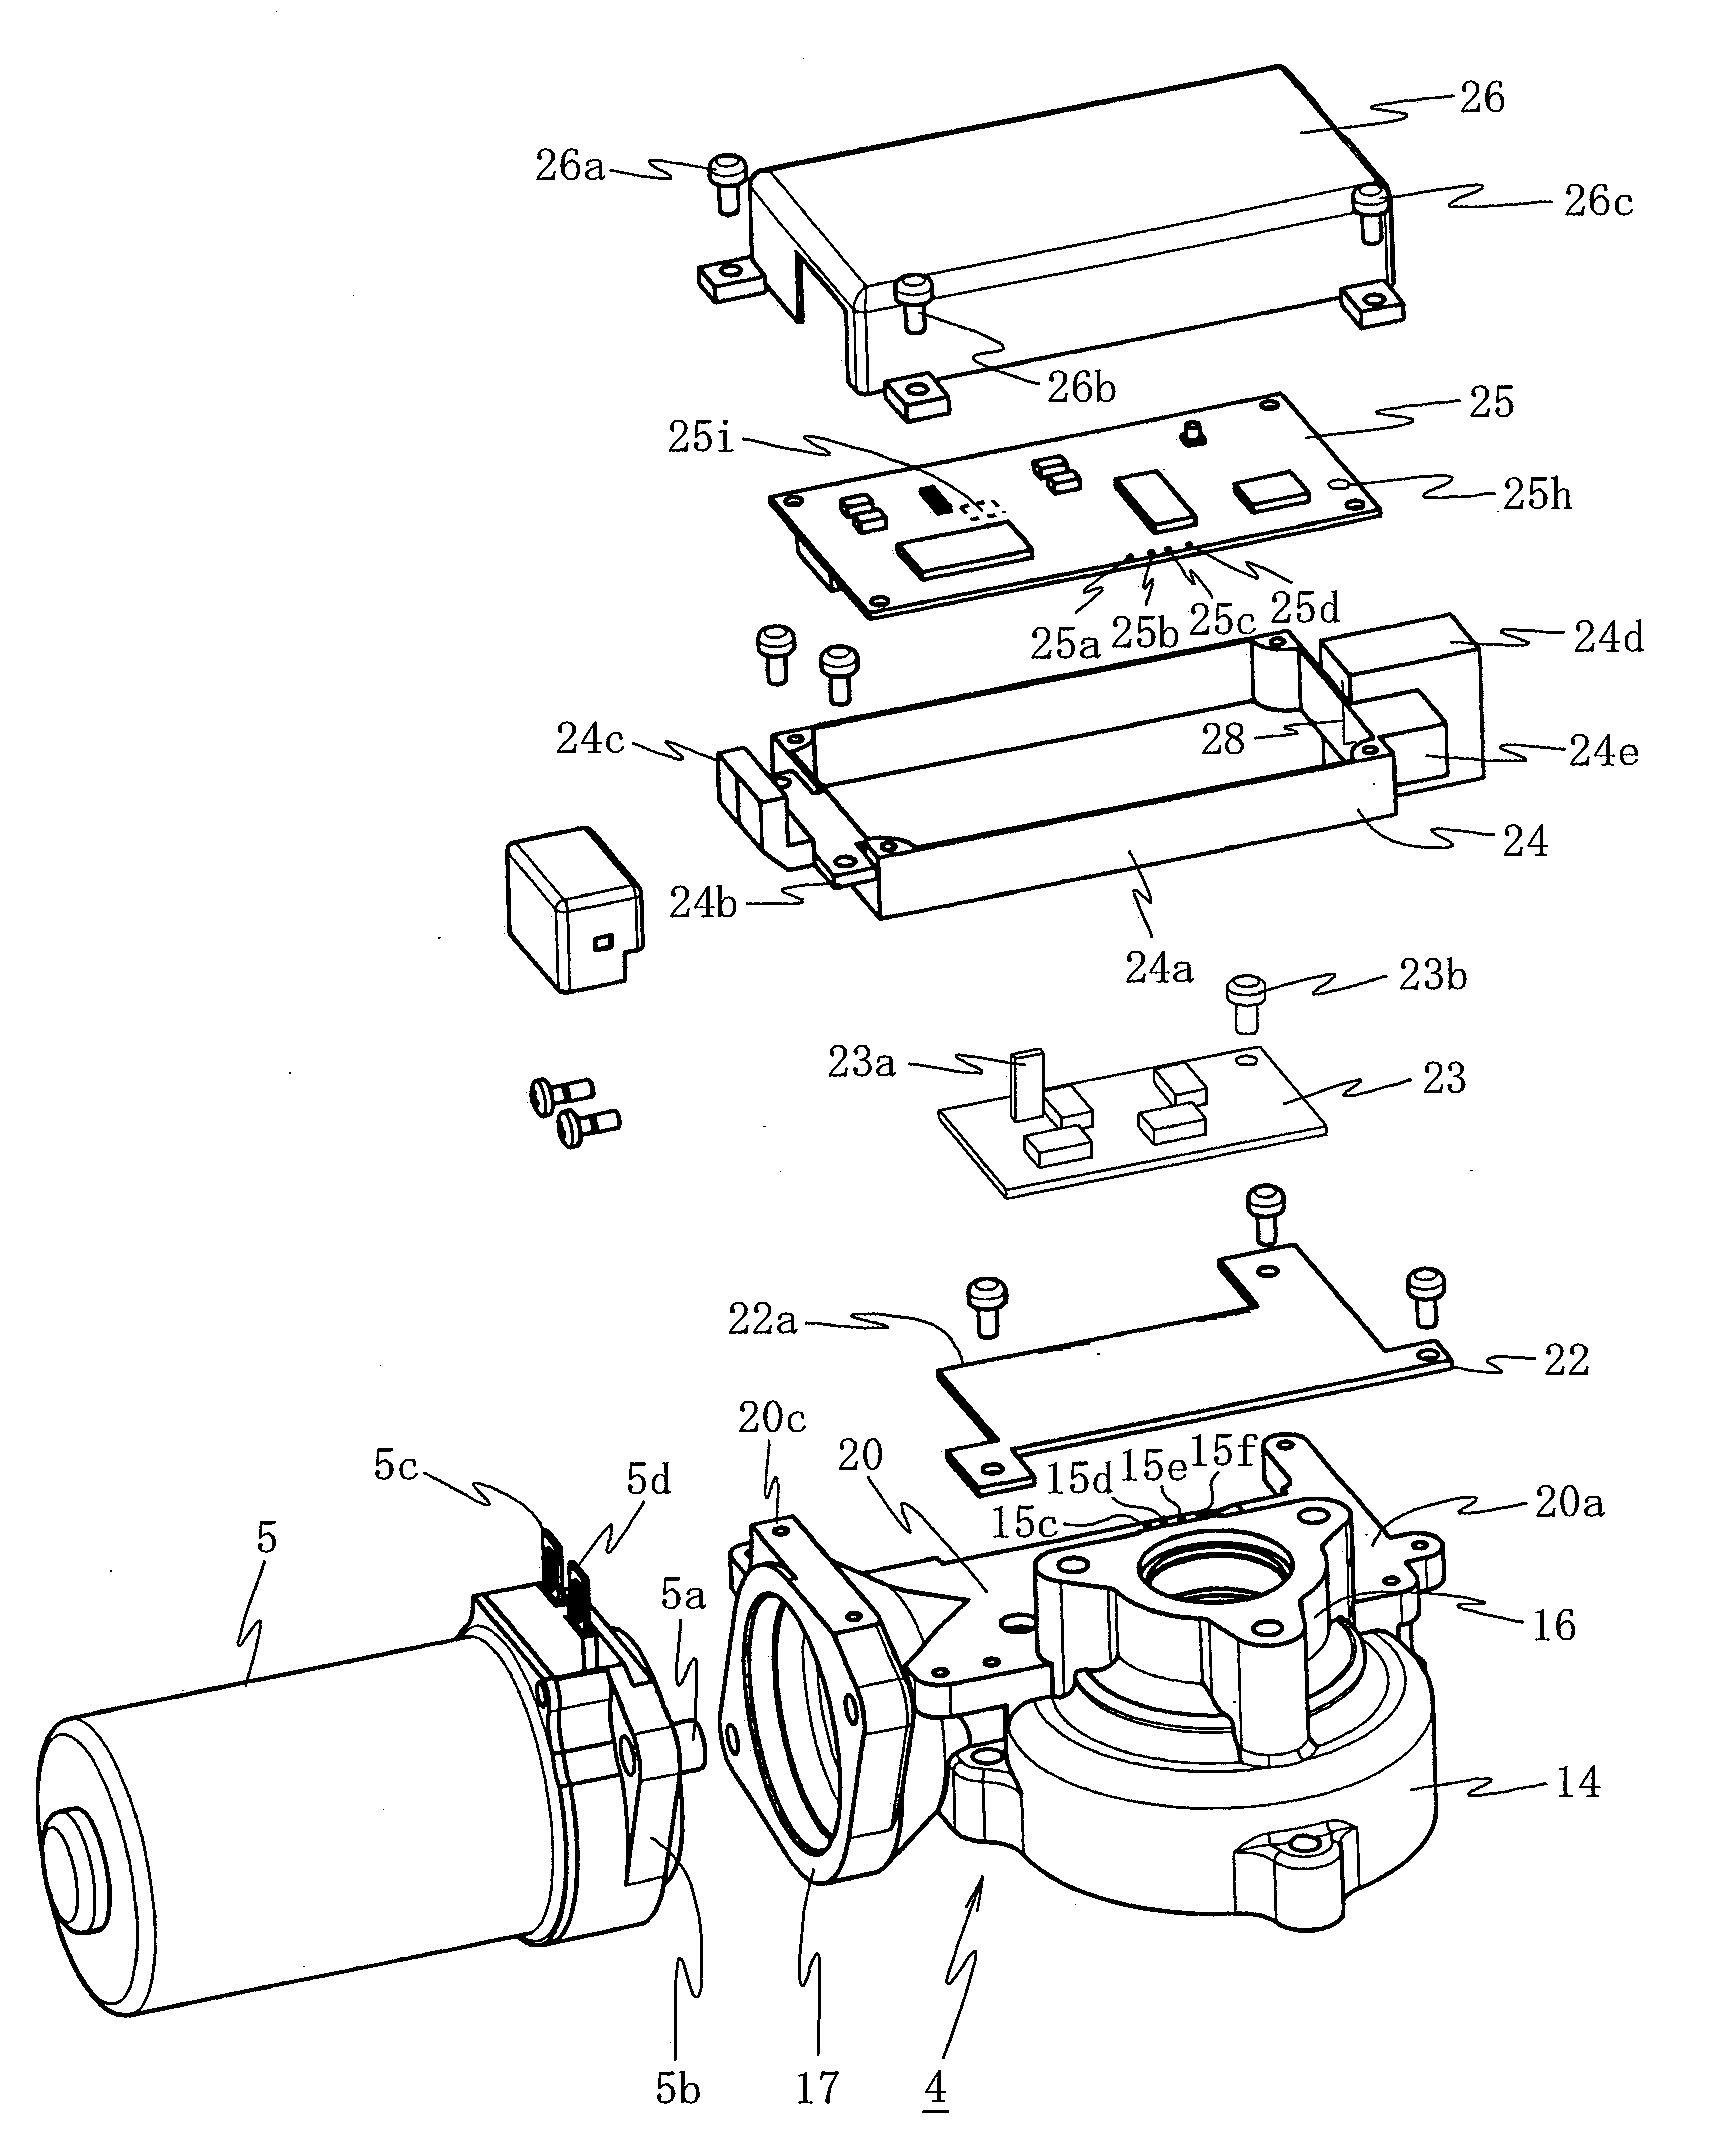 Electric Power Steering Apparatus